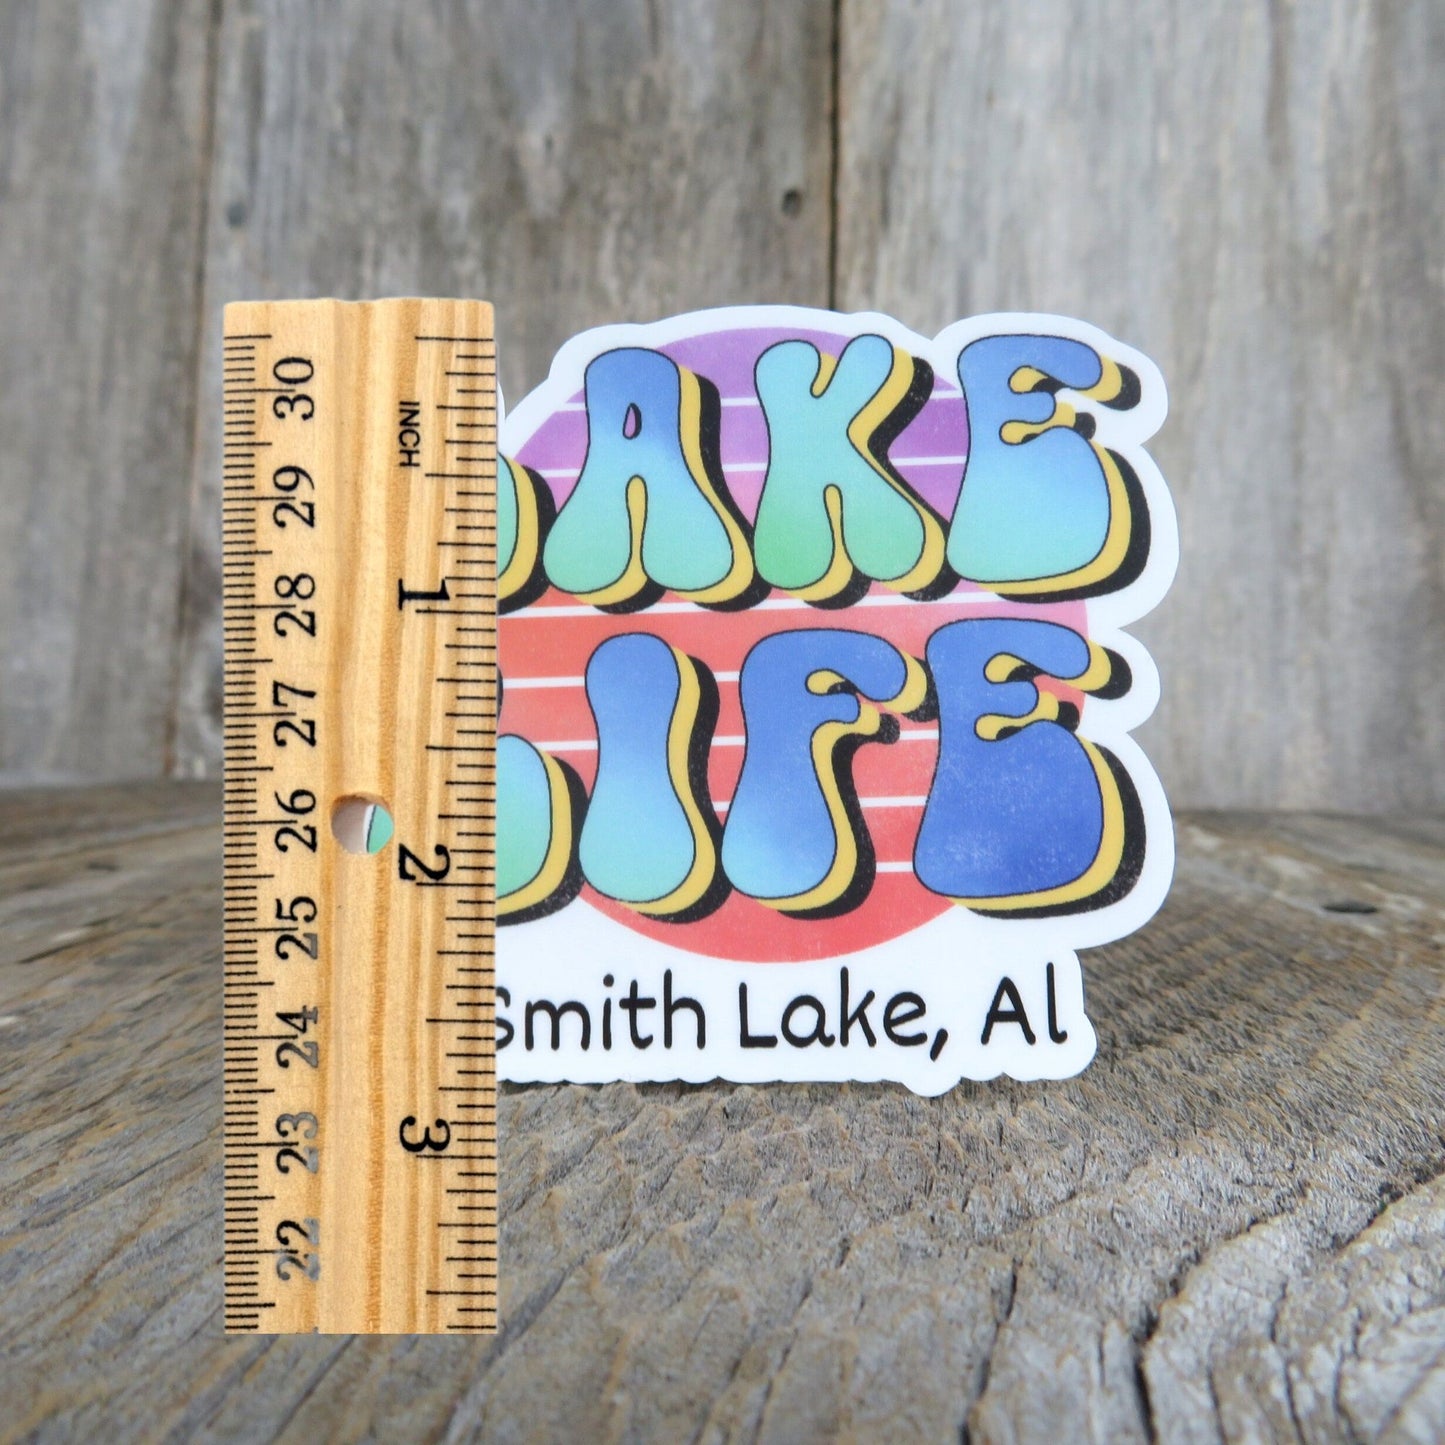 Smith Lake Alabama Sticker Lake Life Waterproof Camping Outdoors Souvenir Black Warrior River